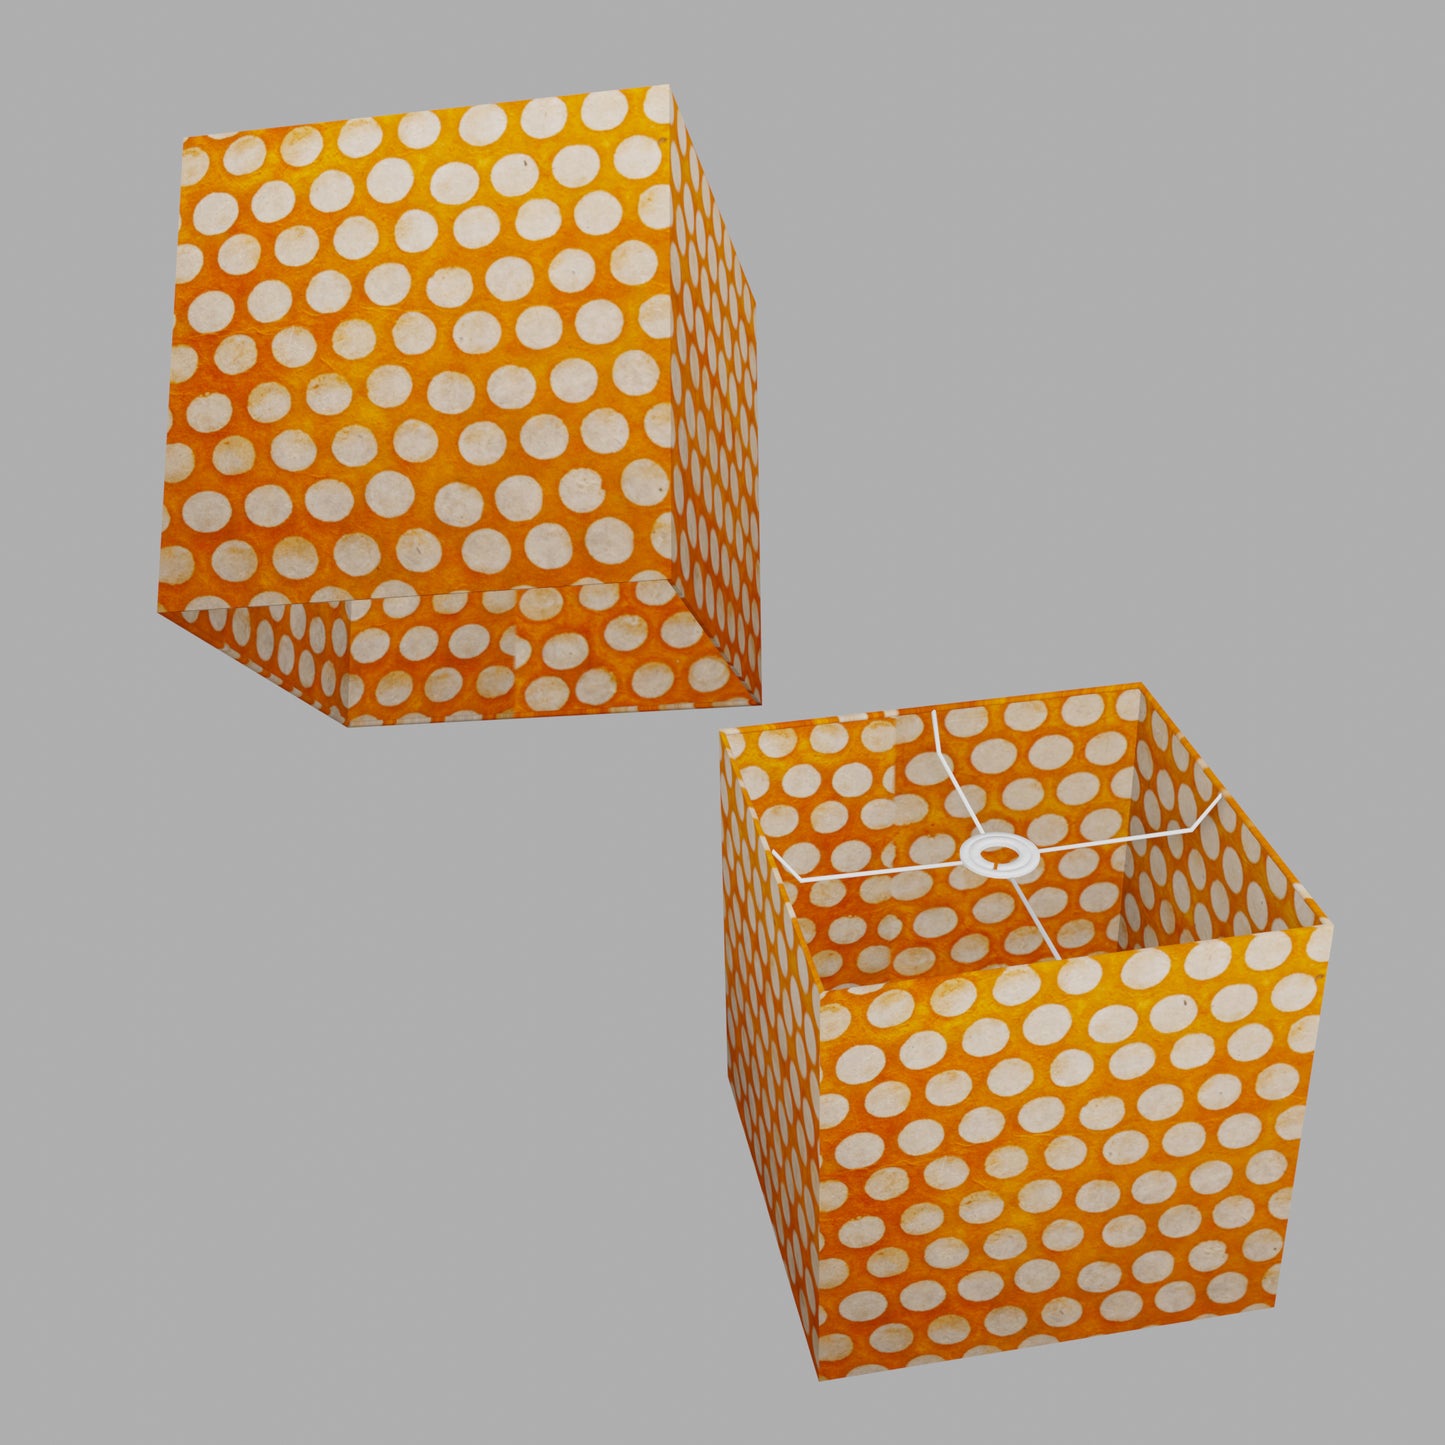 Square Lamp Shade - B110 ~ Batik Dots on Orange, 30cm(w) x 30cm(h) x 30cm(d)